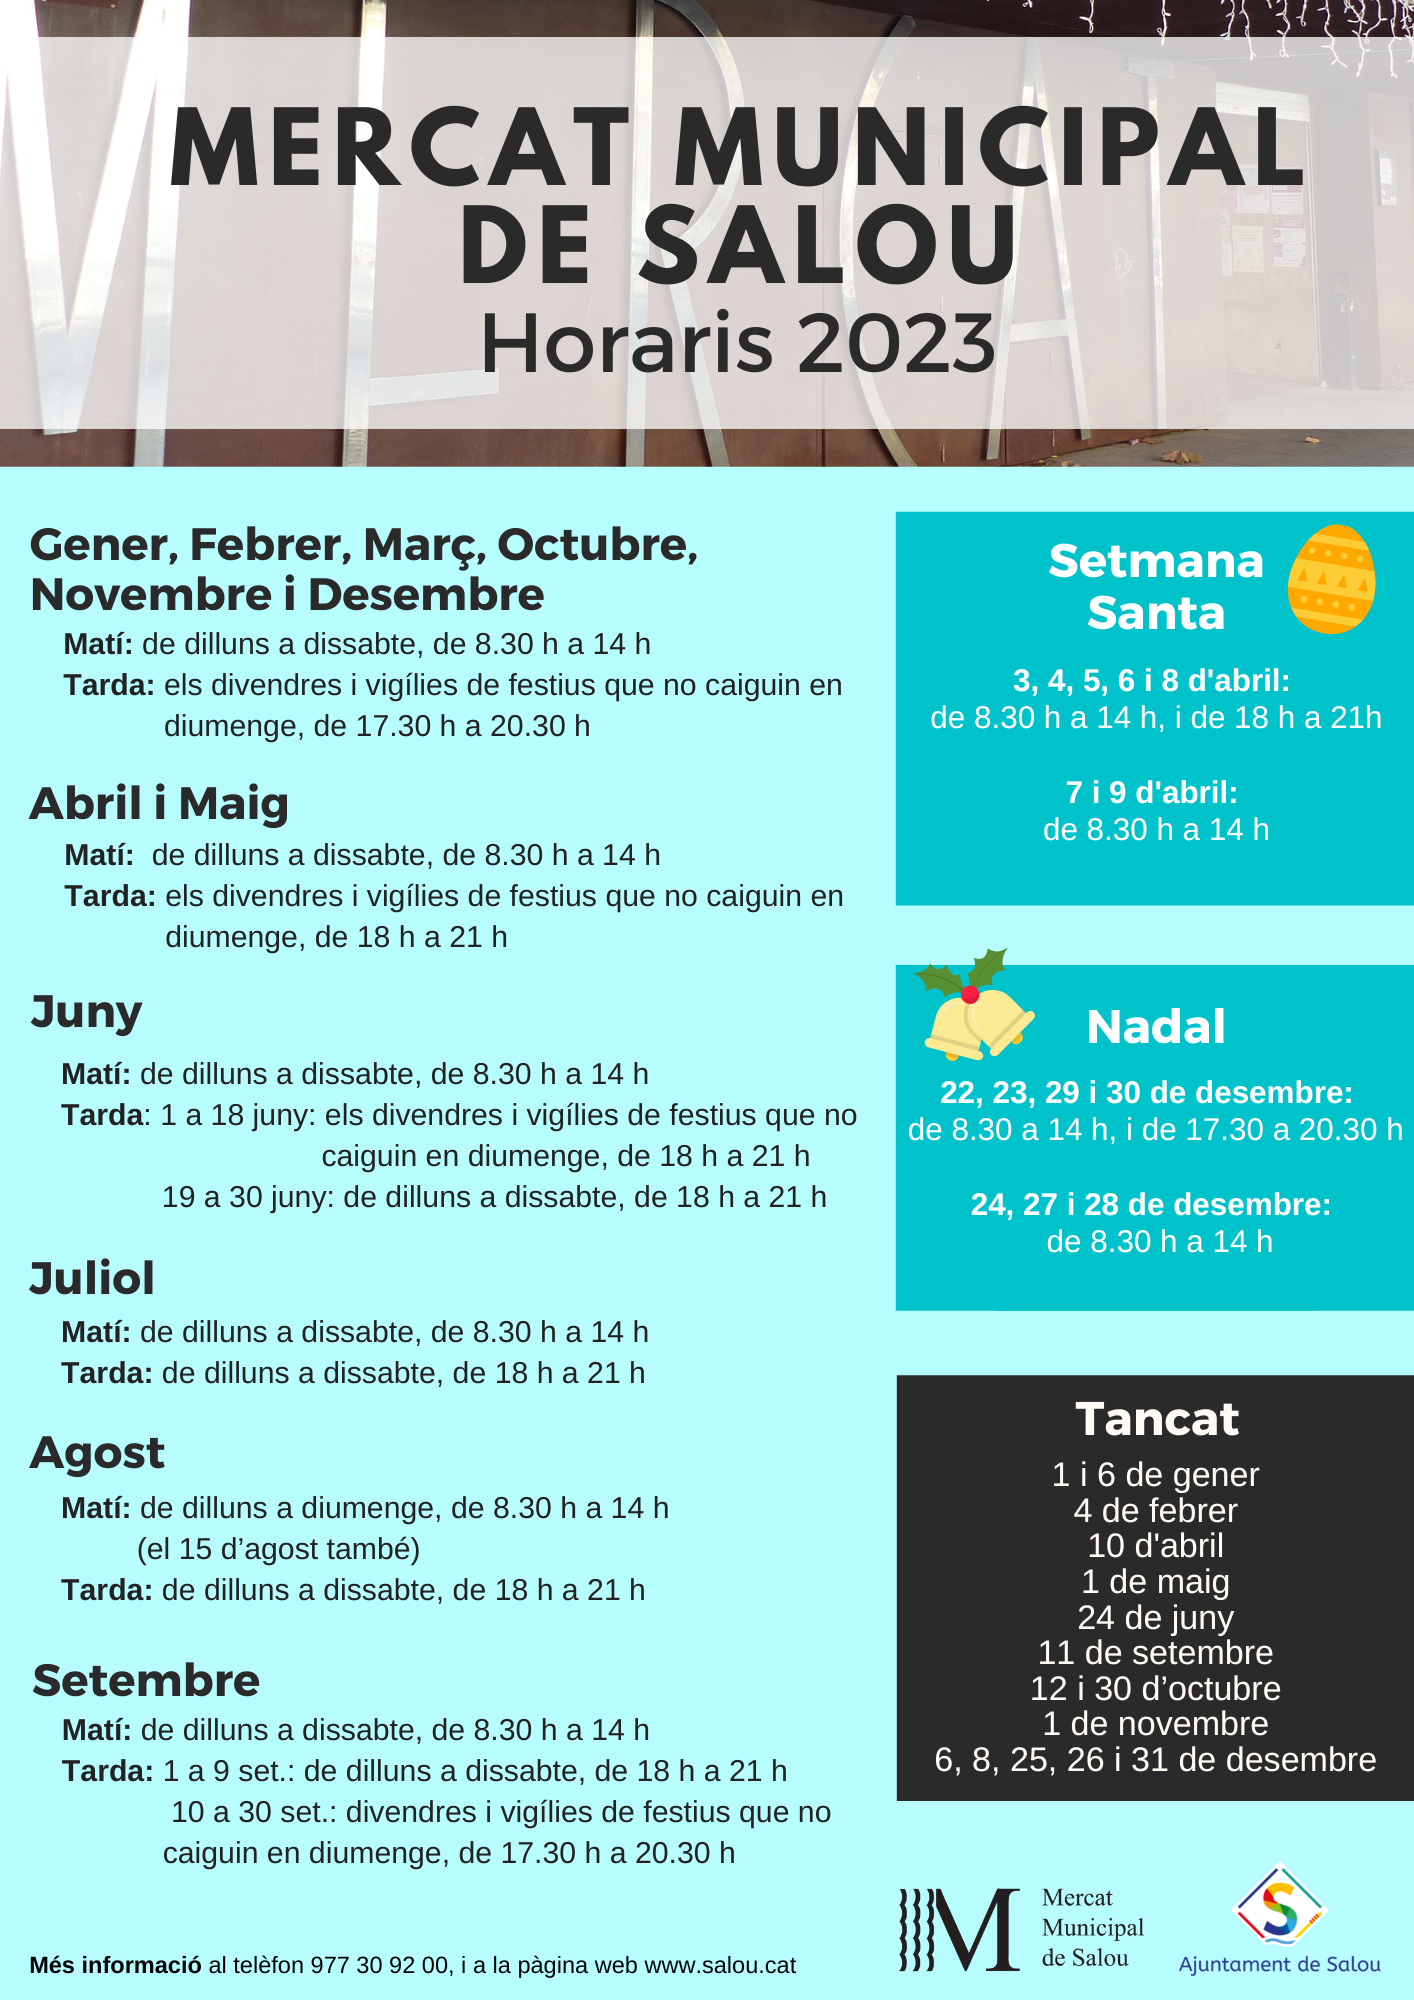 MERCAT MUNICIPAL DE SALOU 2023 1.png